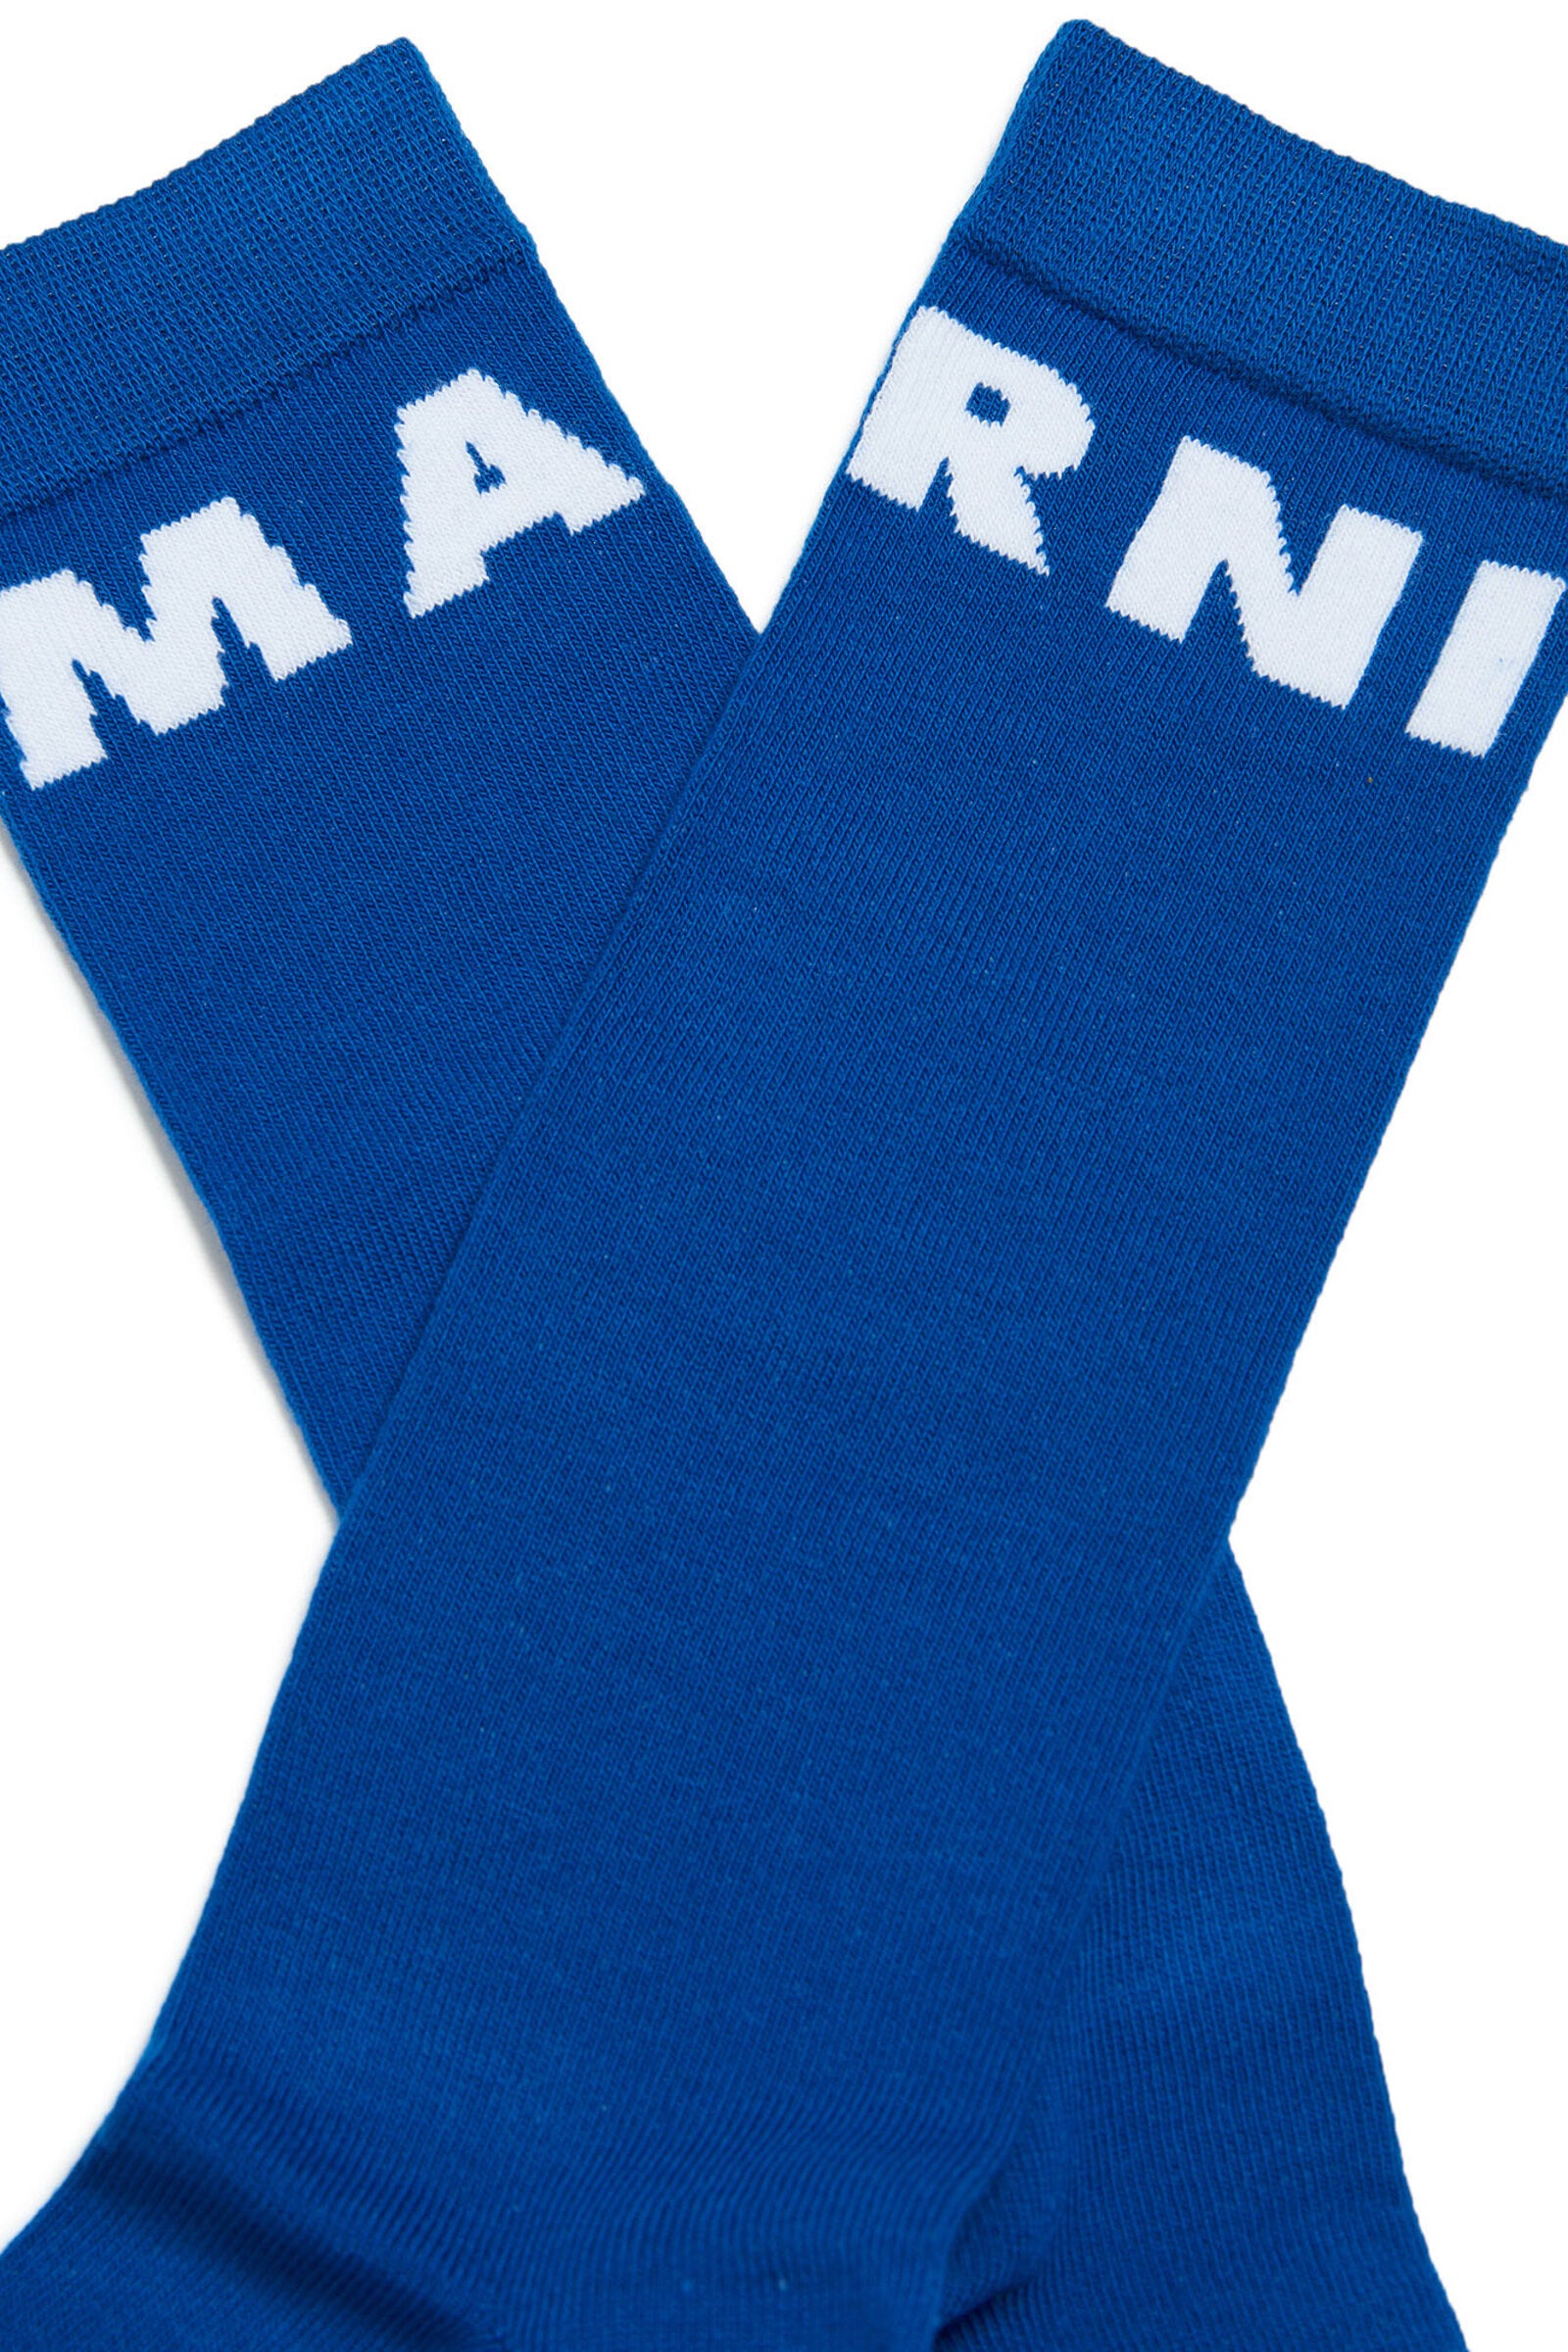 Blue cotton long socks with logo